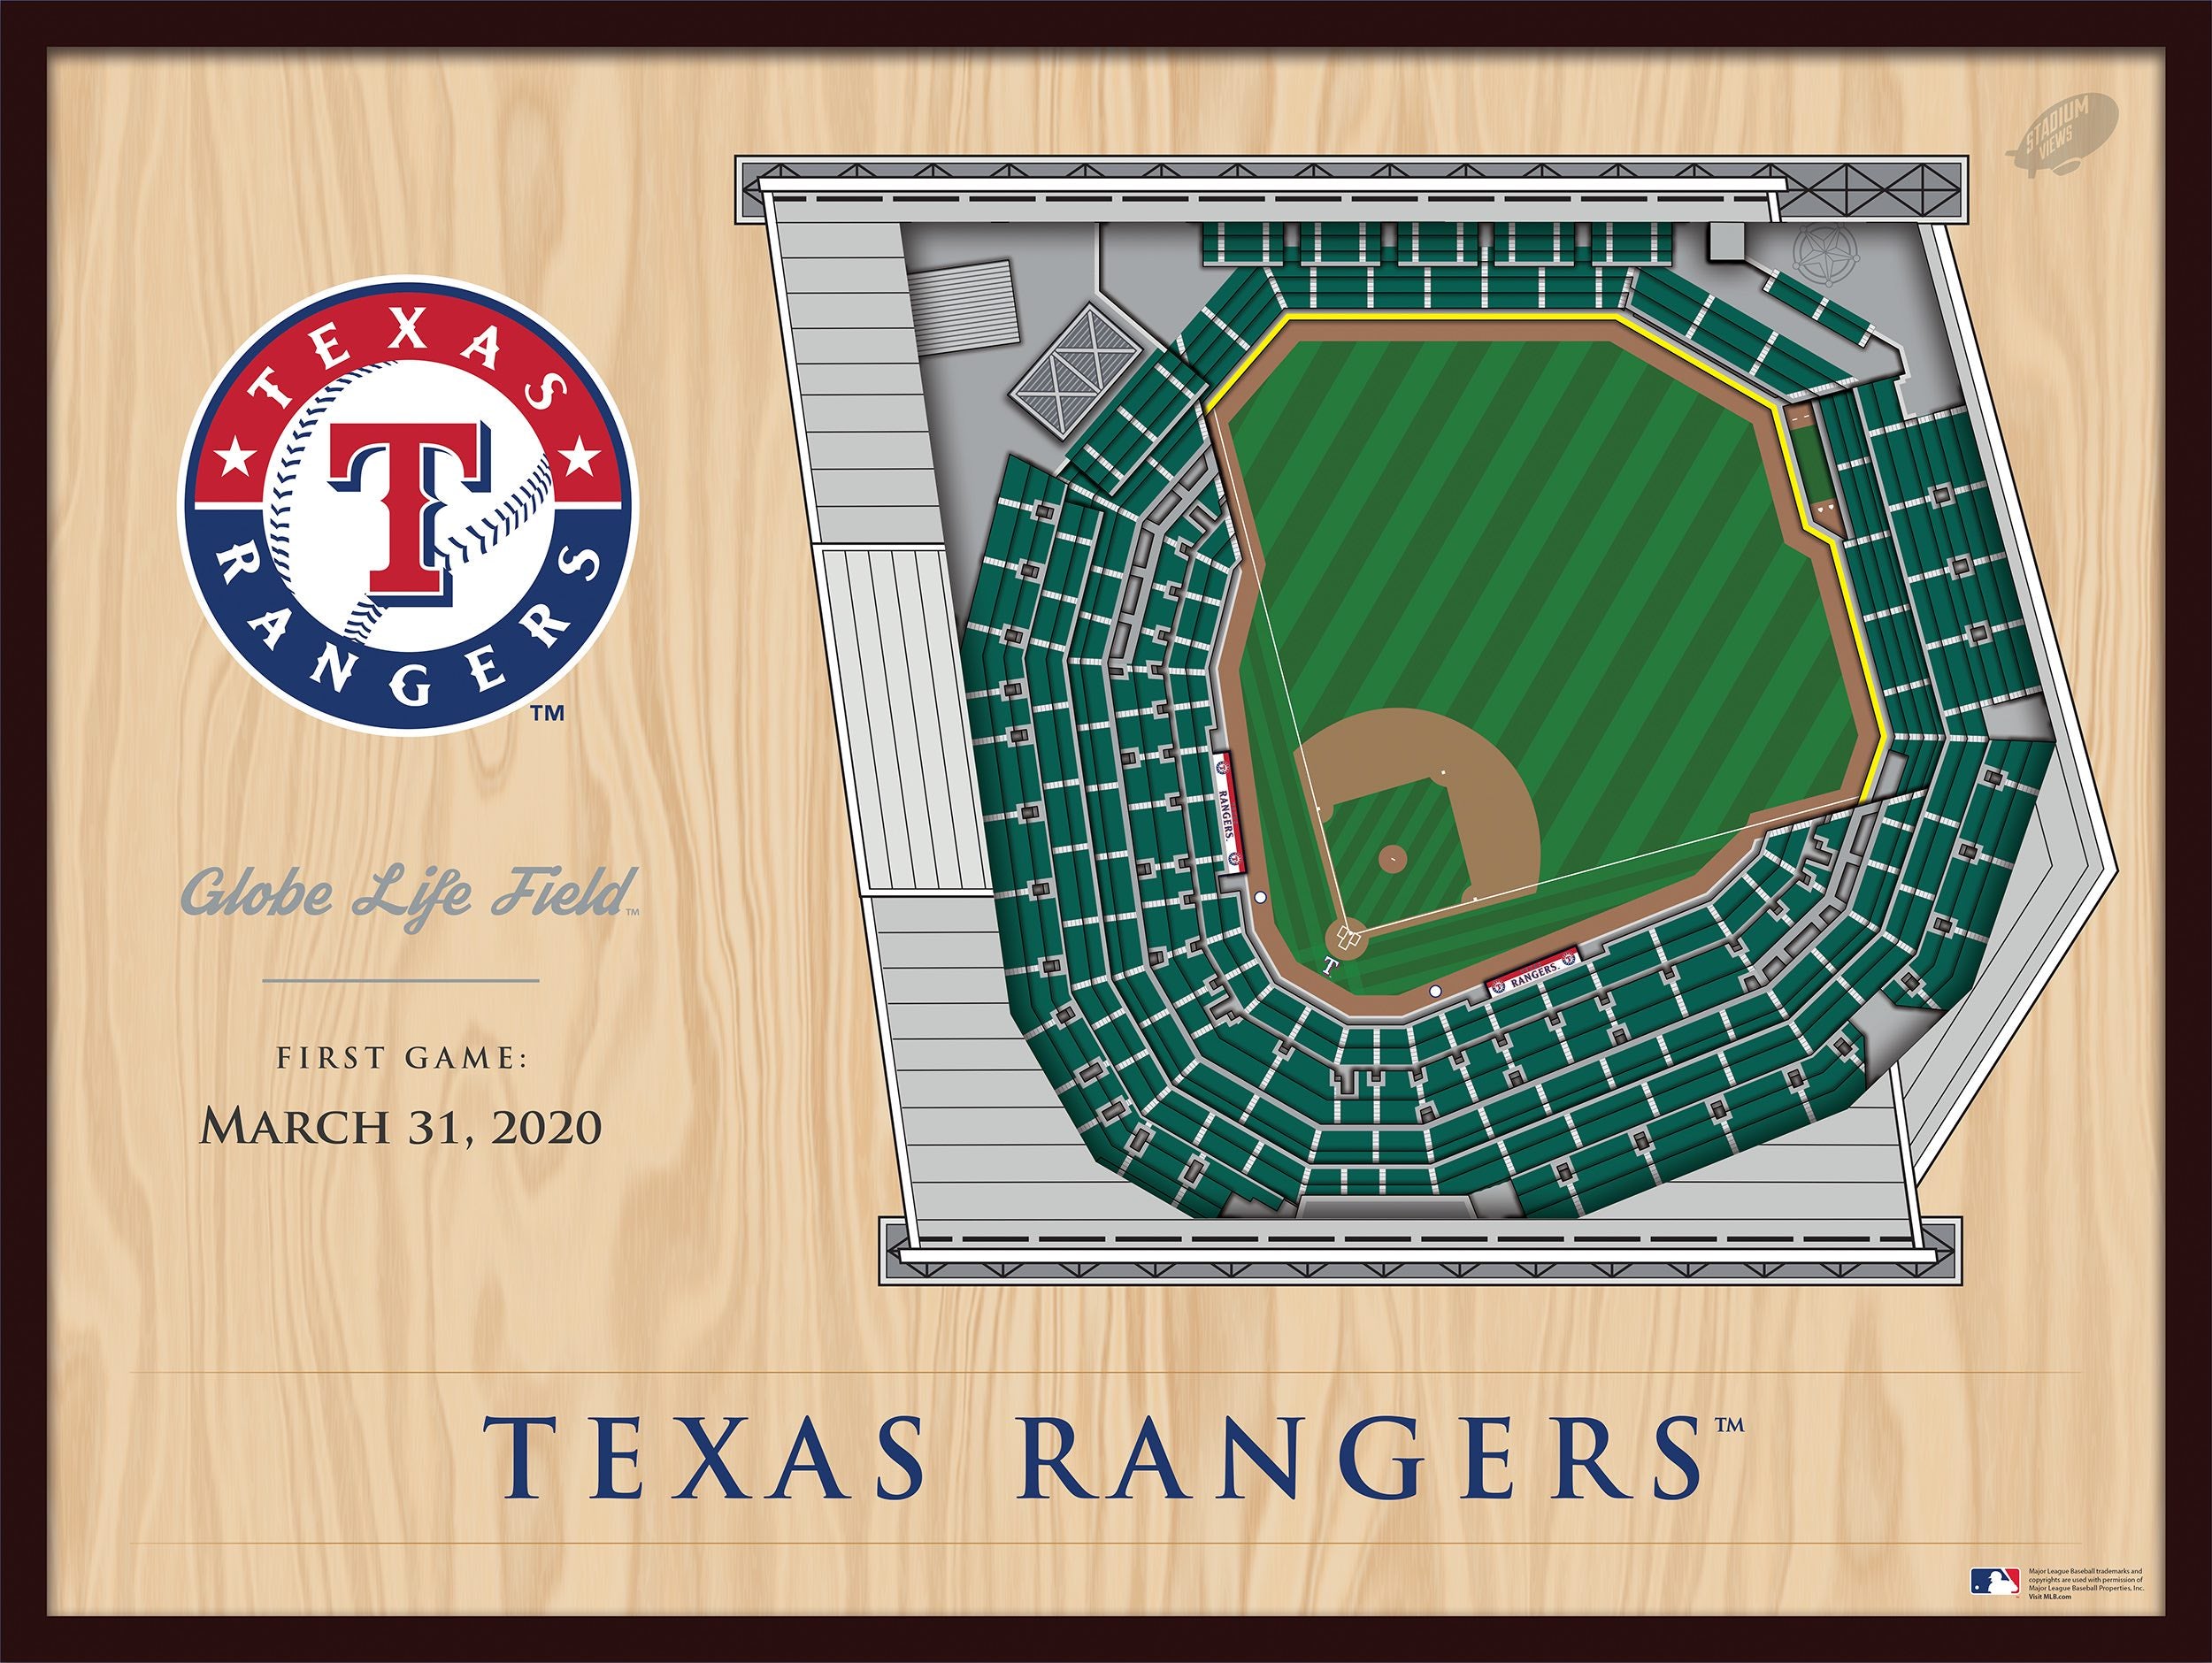 Texas Rangers—Globe Life Field 25-Layer StadiumViews 3D Wall Art